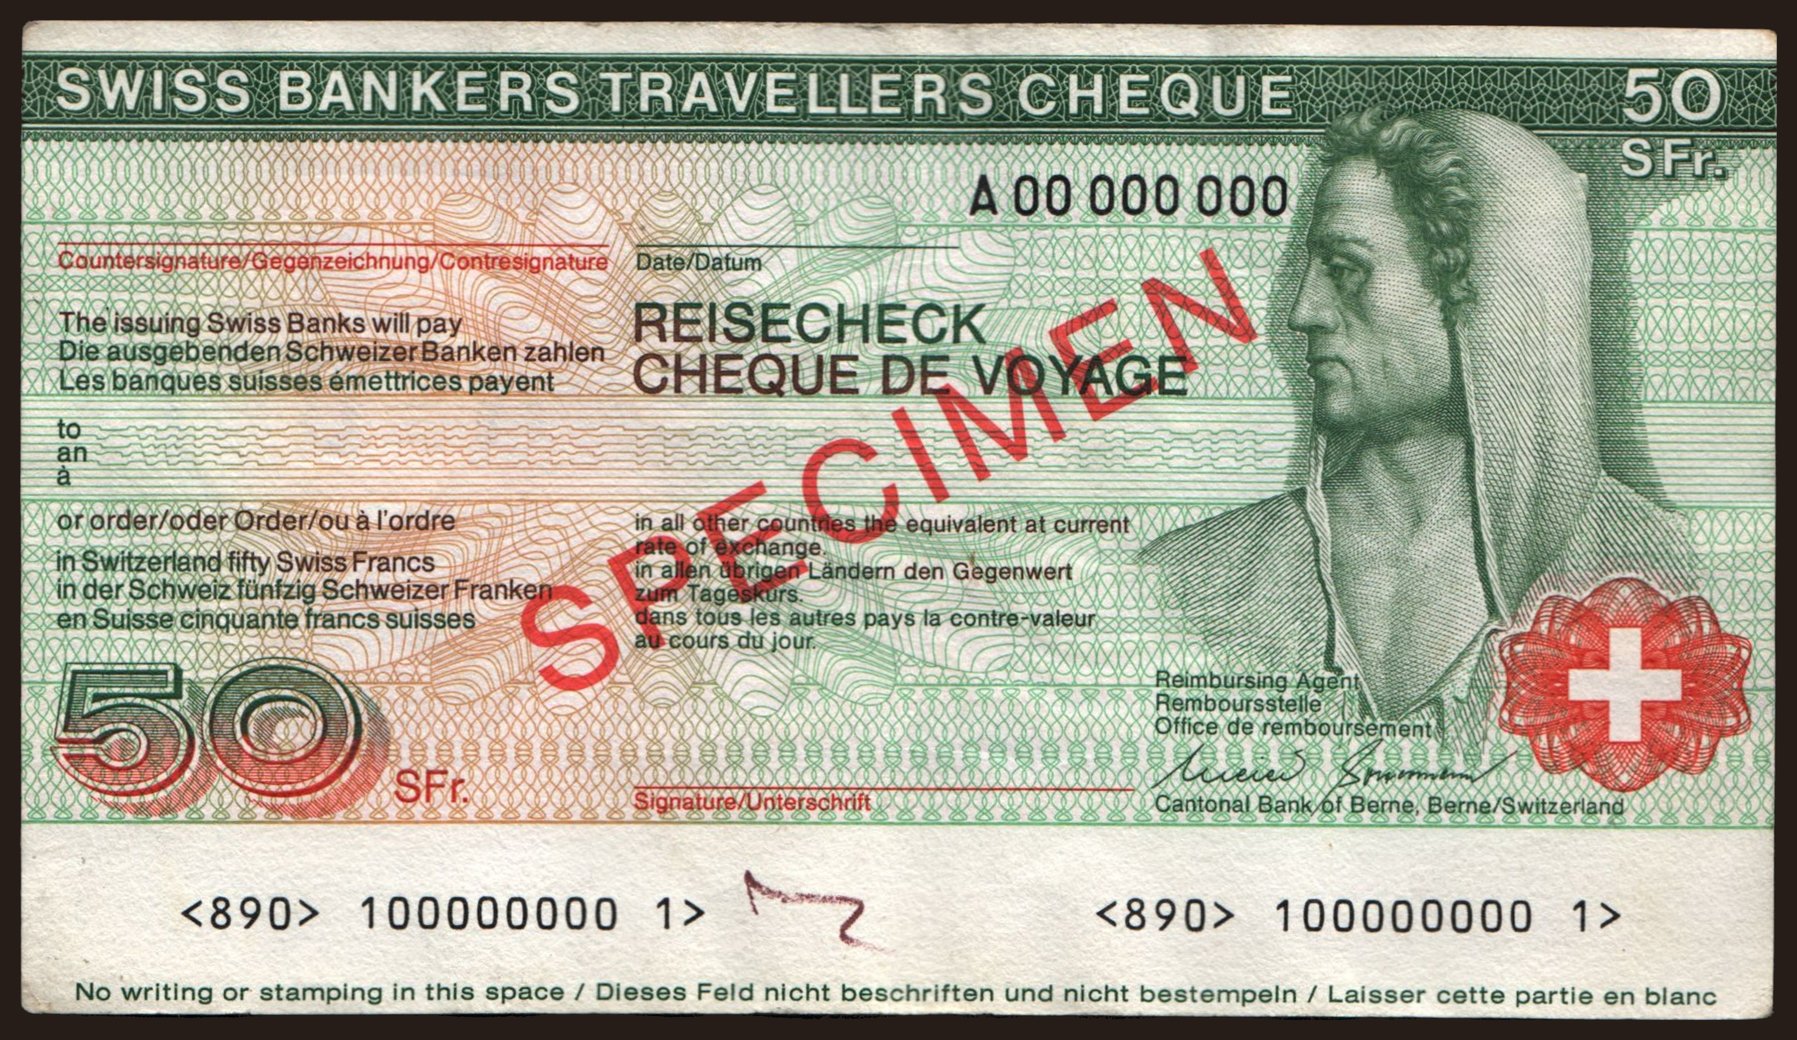 Travellers cheque, Swiss Banks, 50 francs, specimen